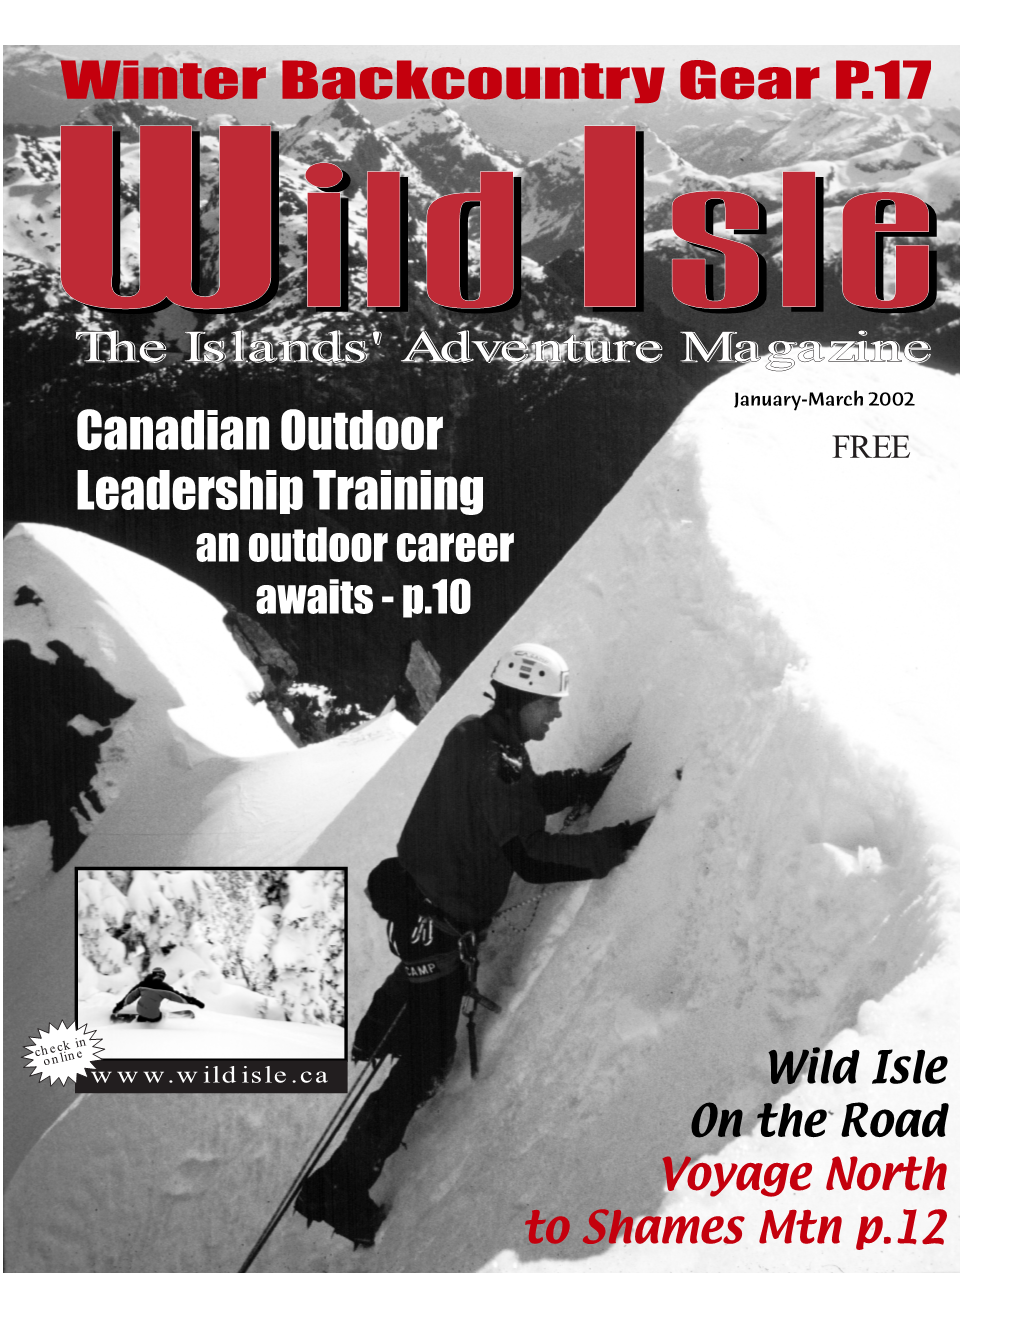 Canadian Outdoor Leadership Training P.10